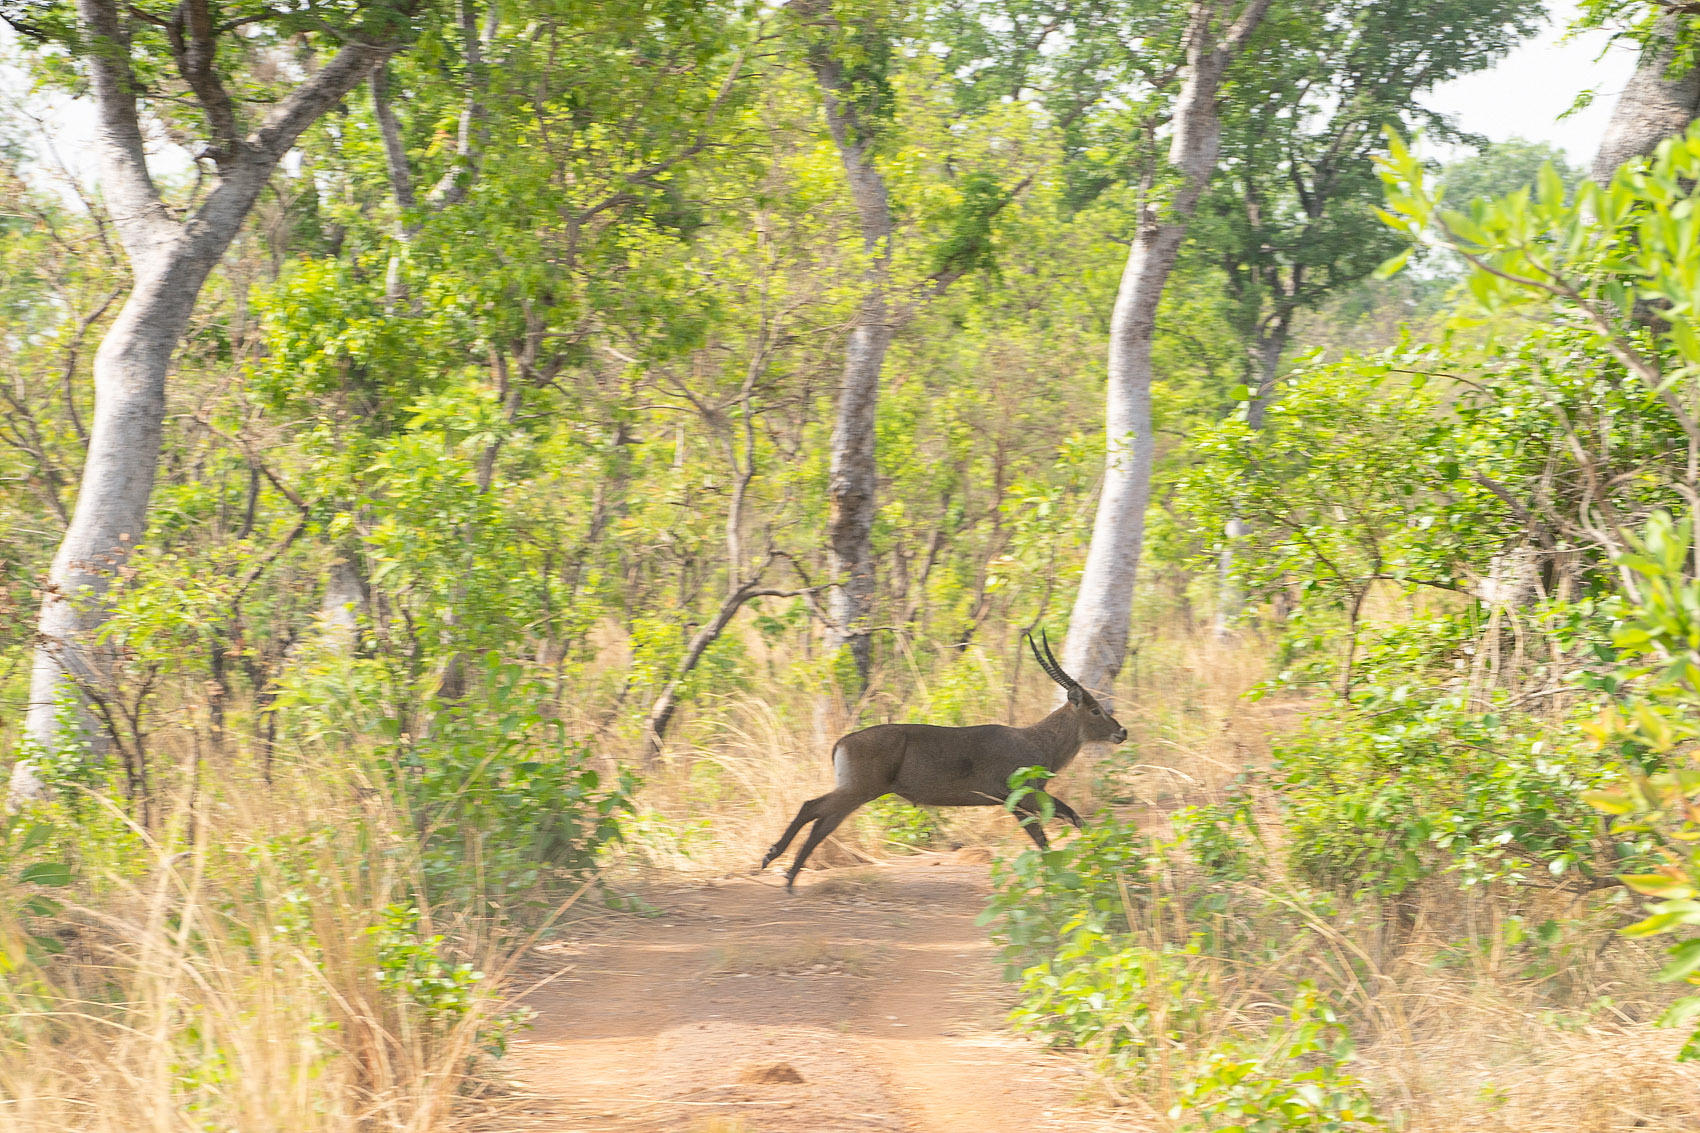 Antilope in Ghana